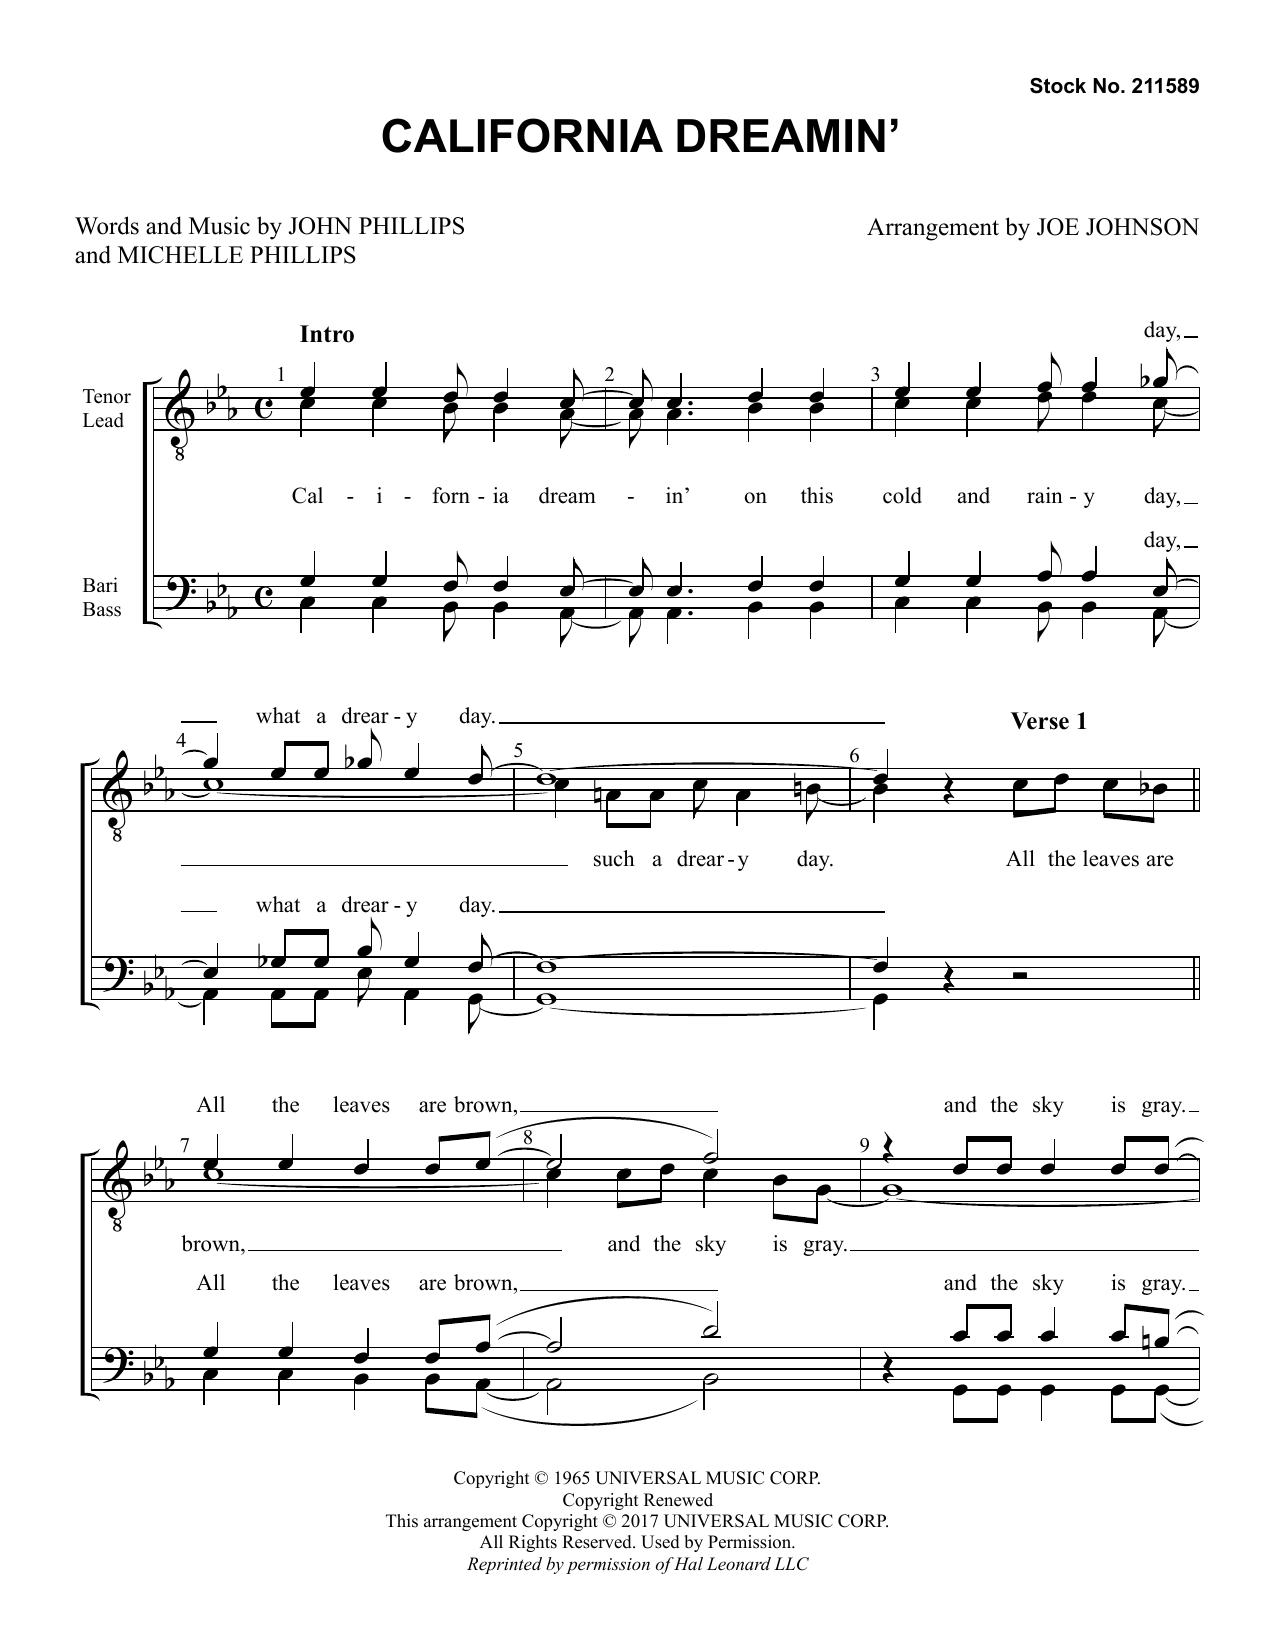 Download The Mamas & The Papas California Dreamin' (arr. Joe Johnson) Sheet Music and learn how to play TTBB Choir PDF digital score in minutes